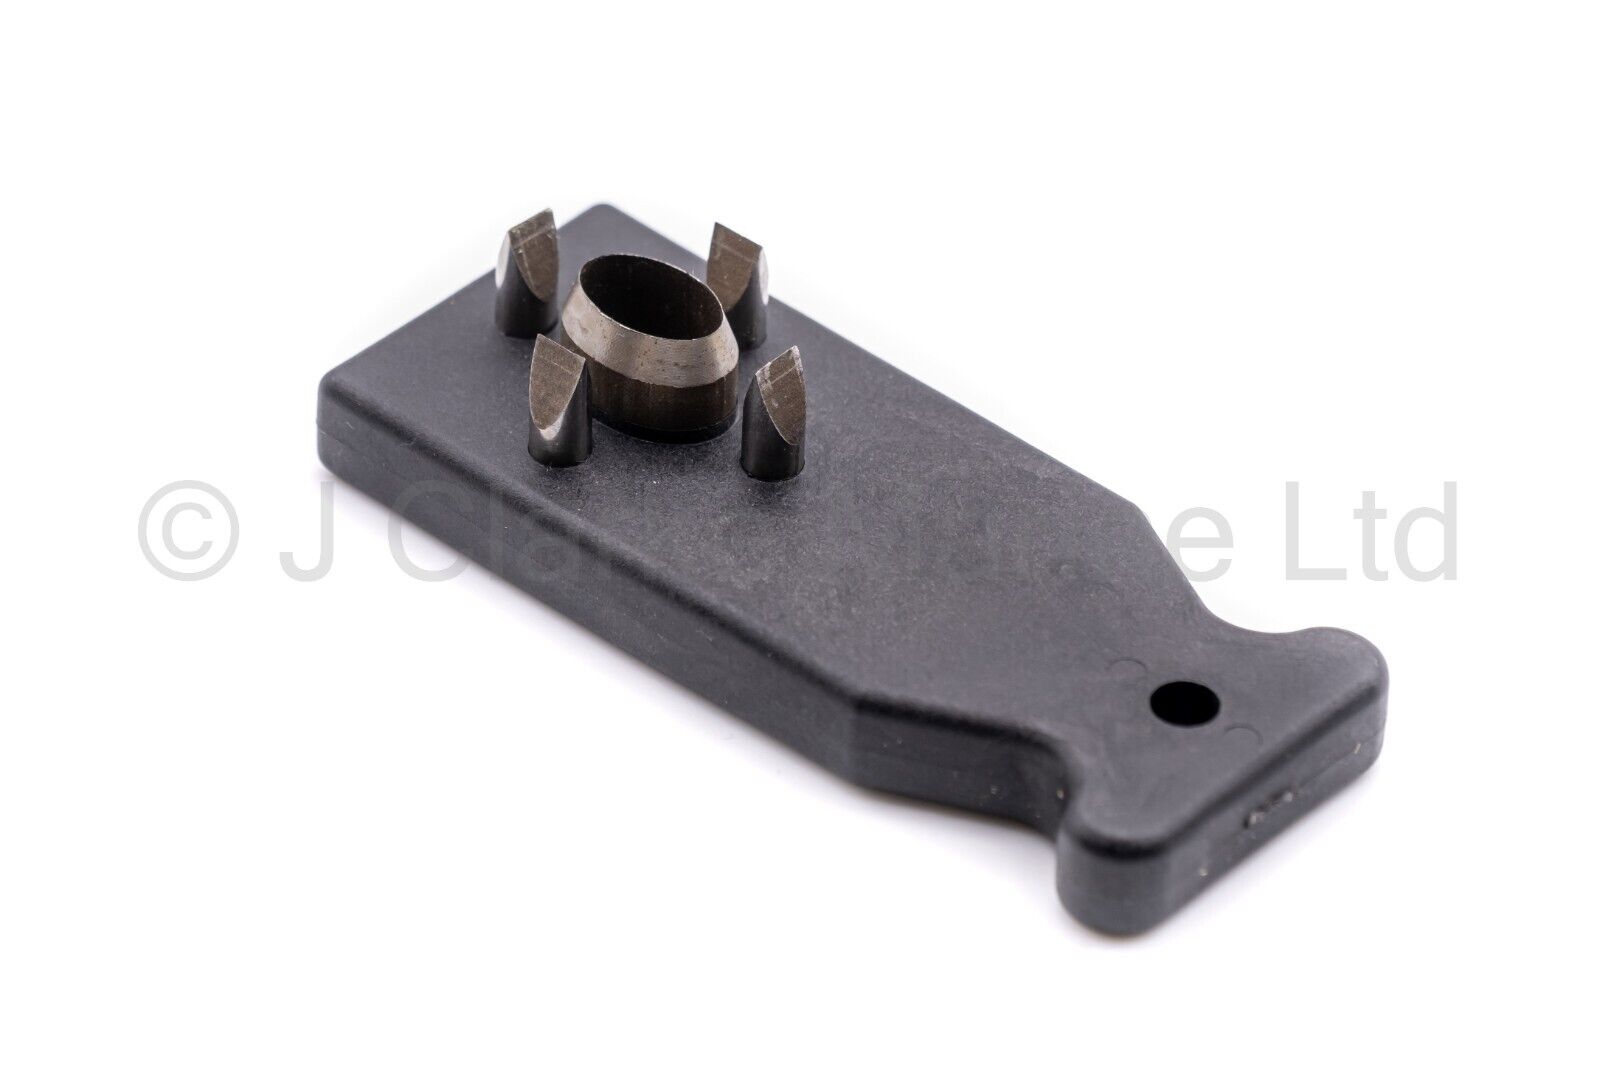 Twist lock / common sense fastener hole punch cutting tool by J Clarke Marine 